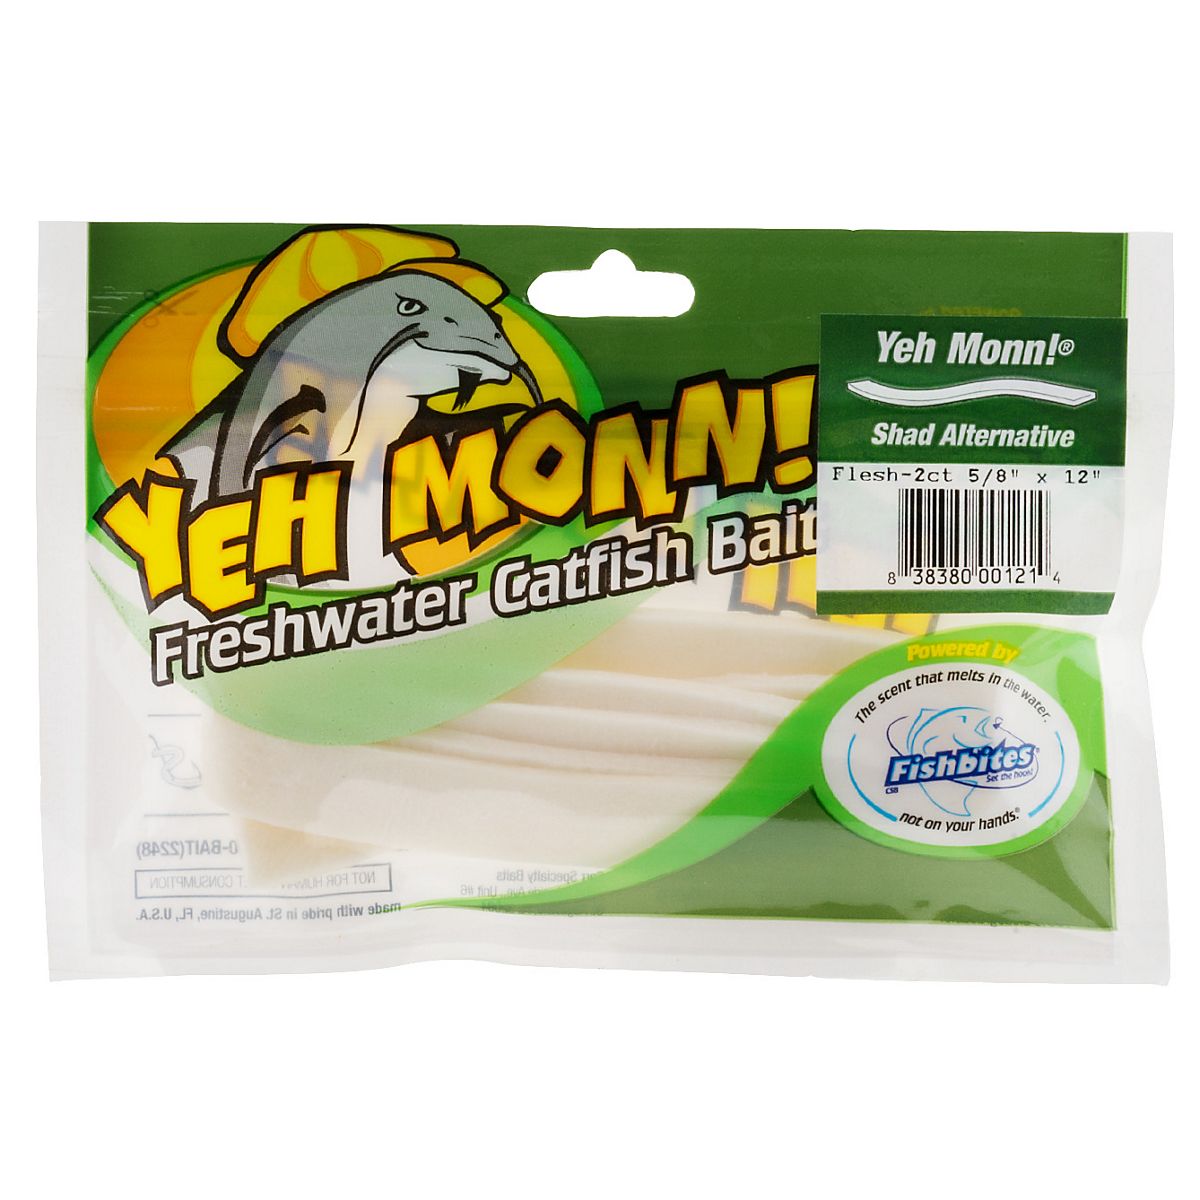 Fishbites Yeh Monn!® Catfish Baits 2-Pack